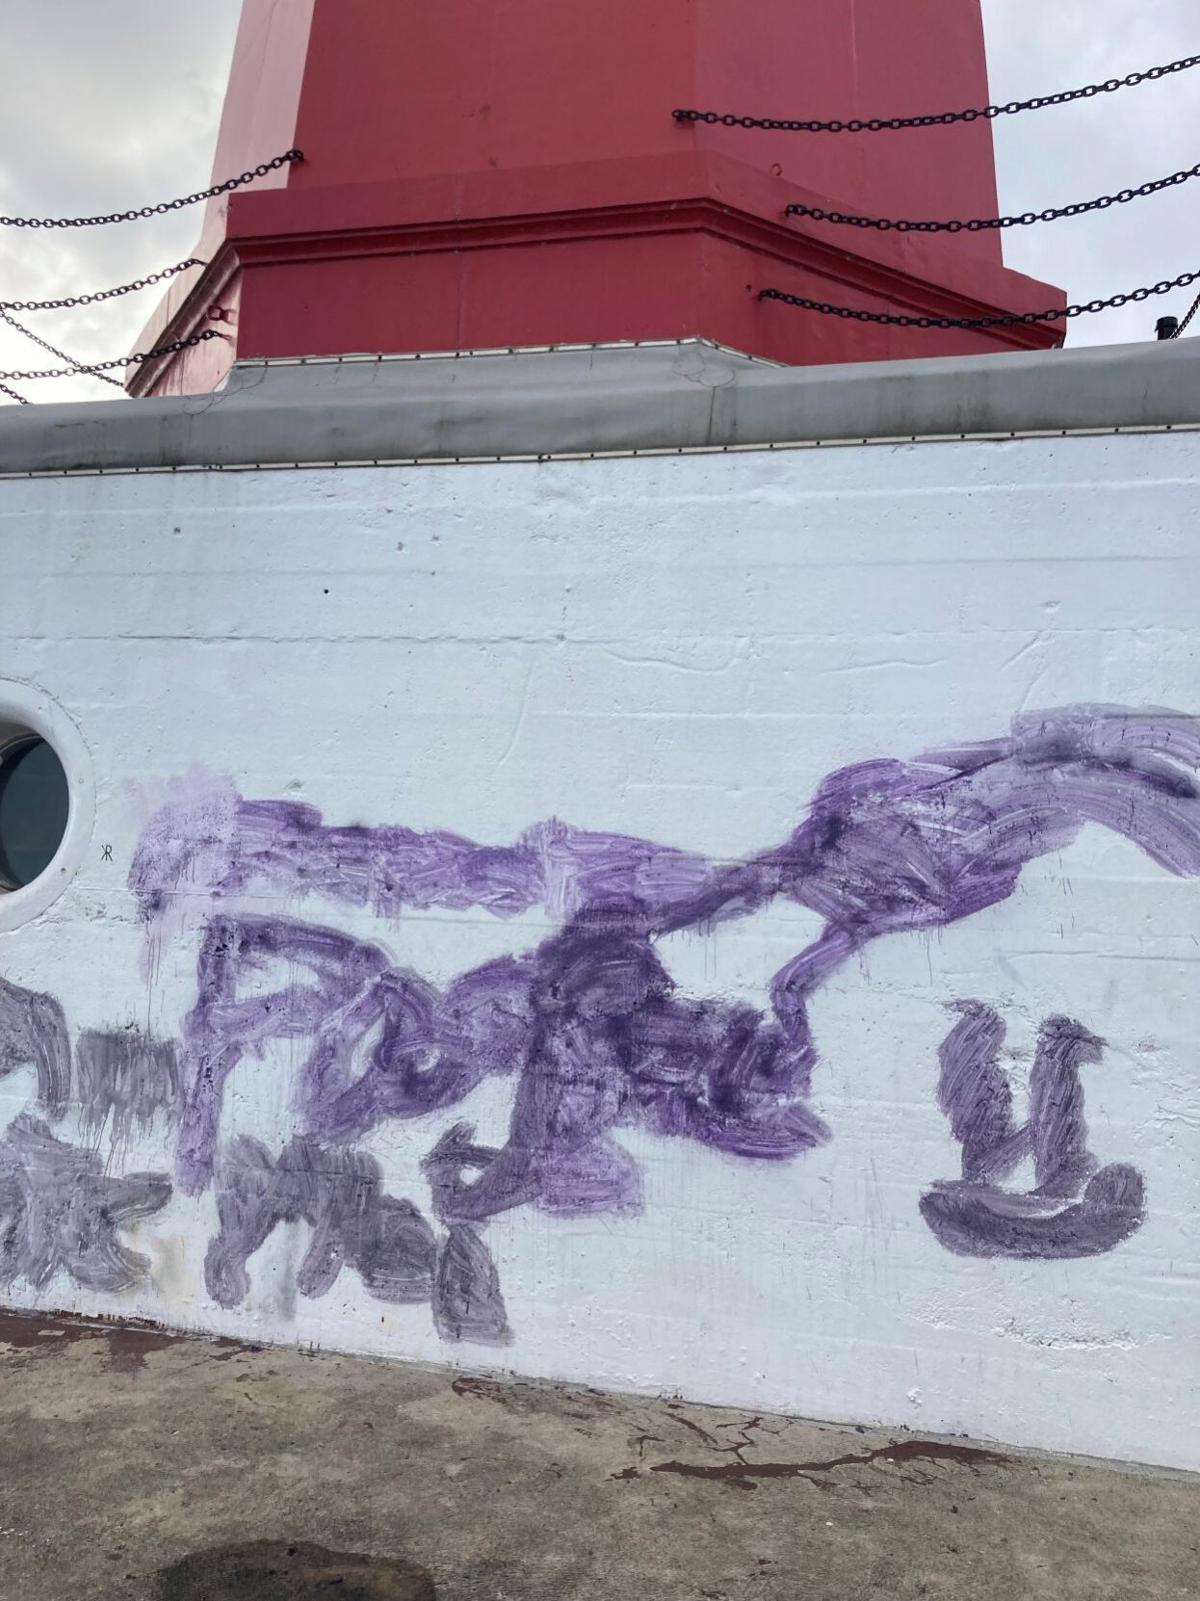 Menominee Lighthouse vandalized with graffiti